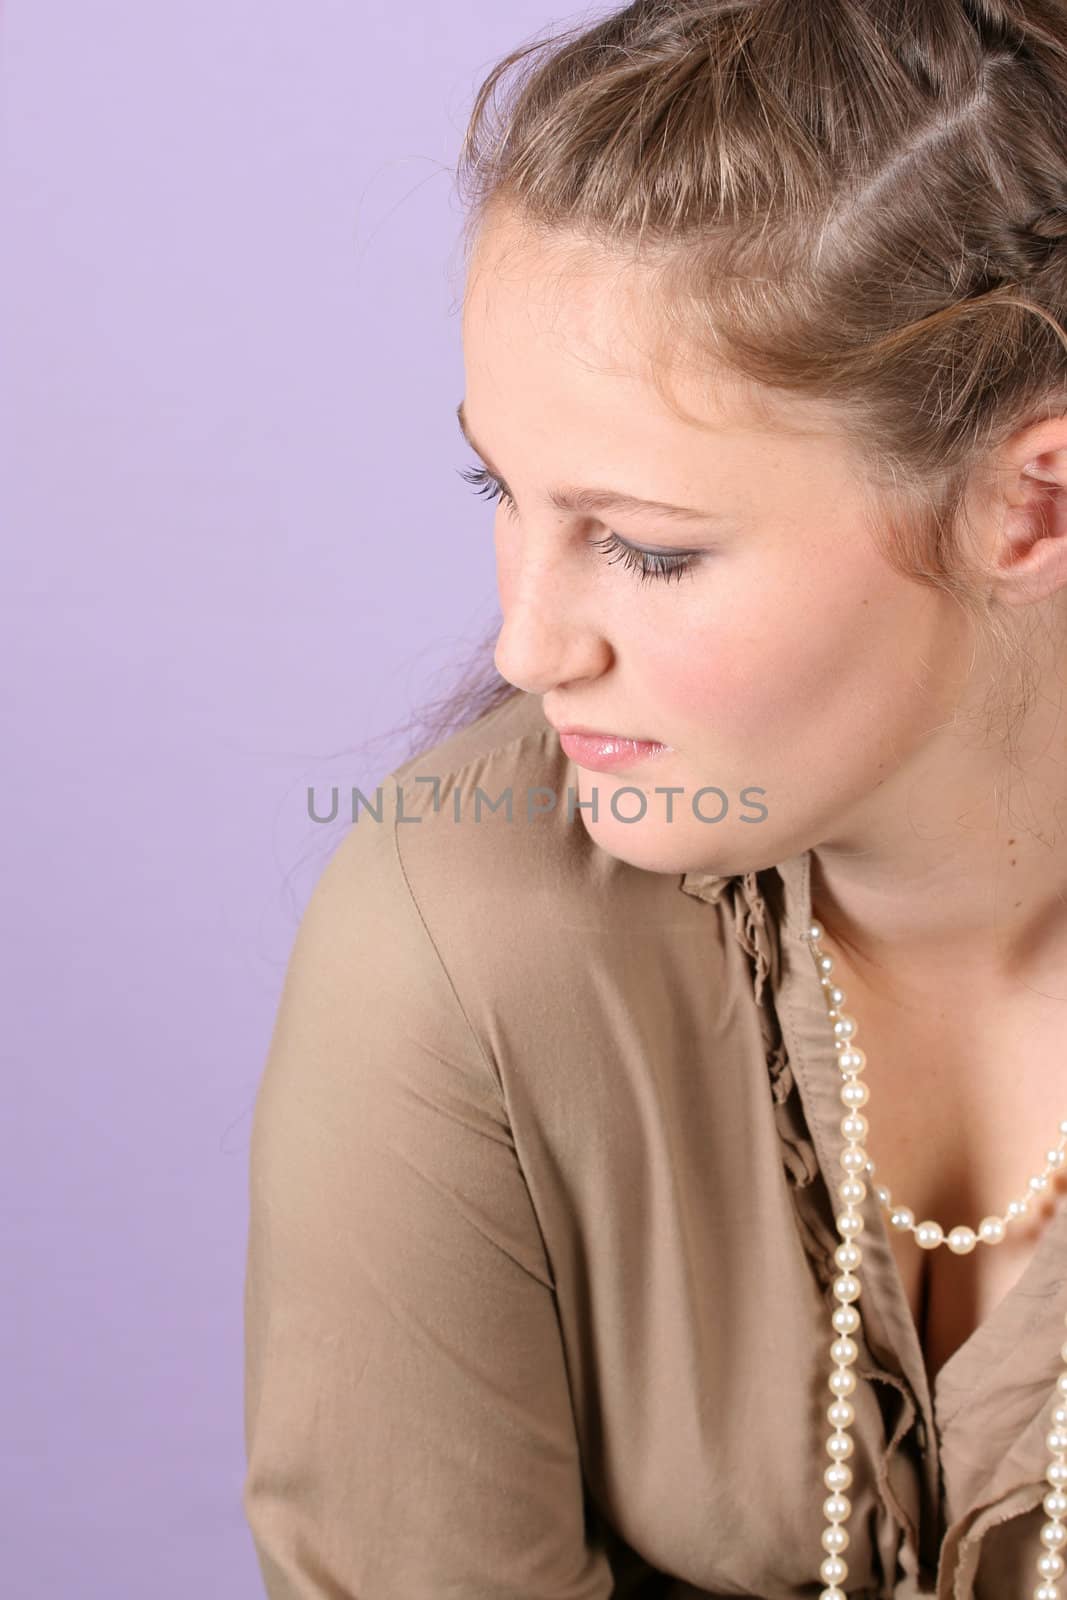 Beautiful teenage female against purple background, wearing pearls